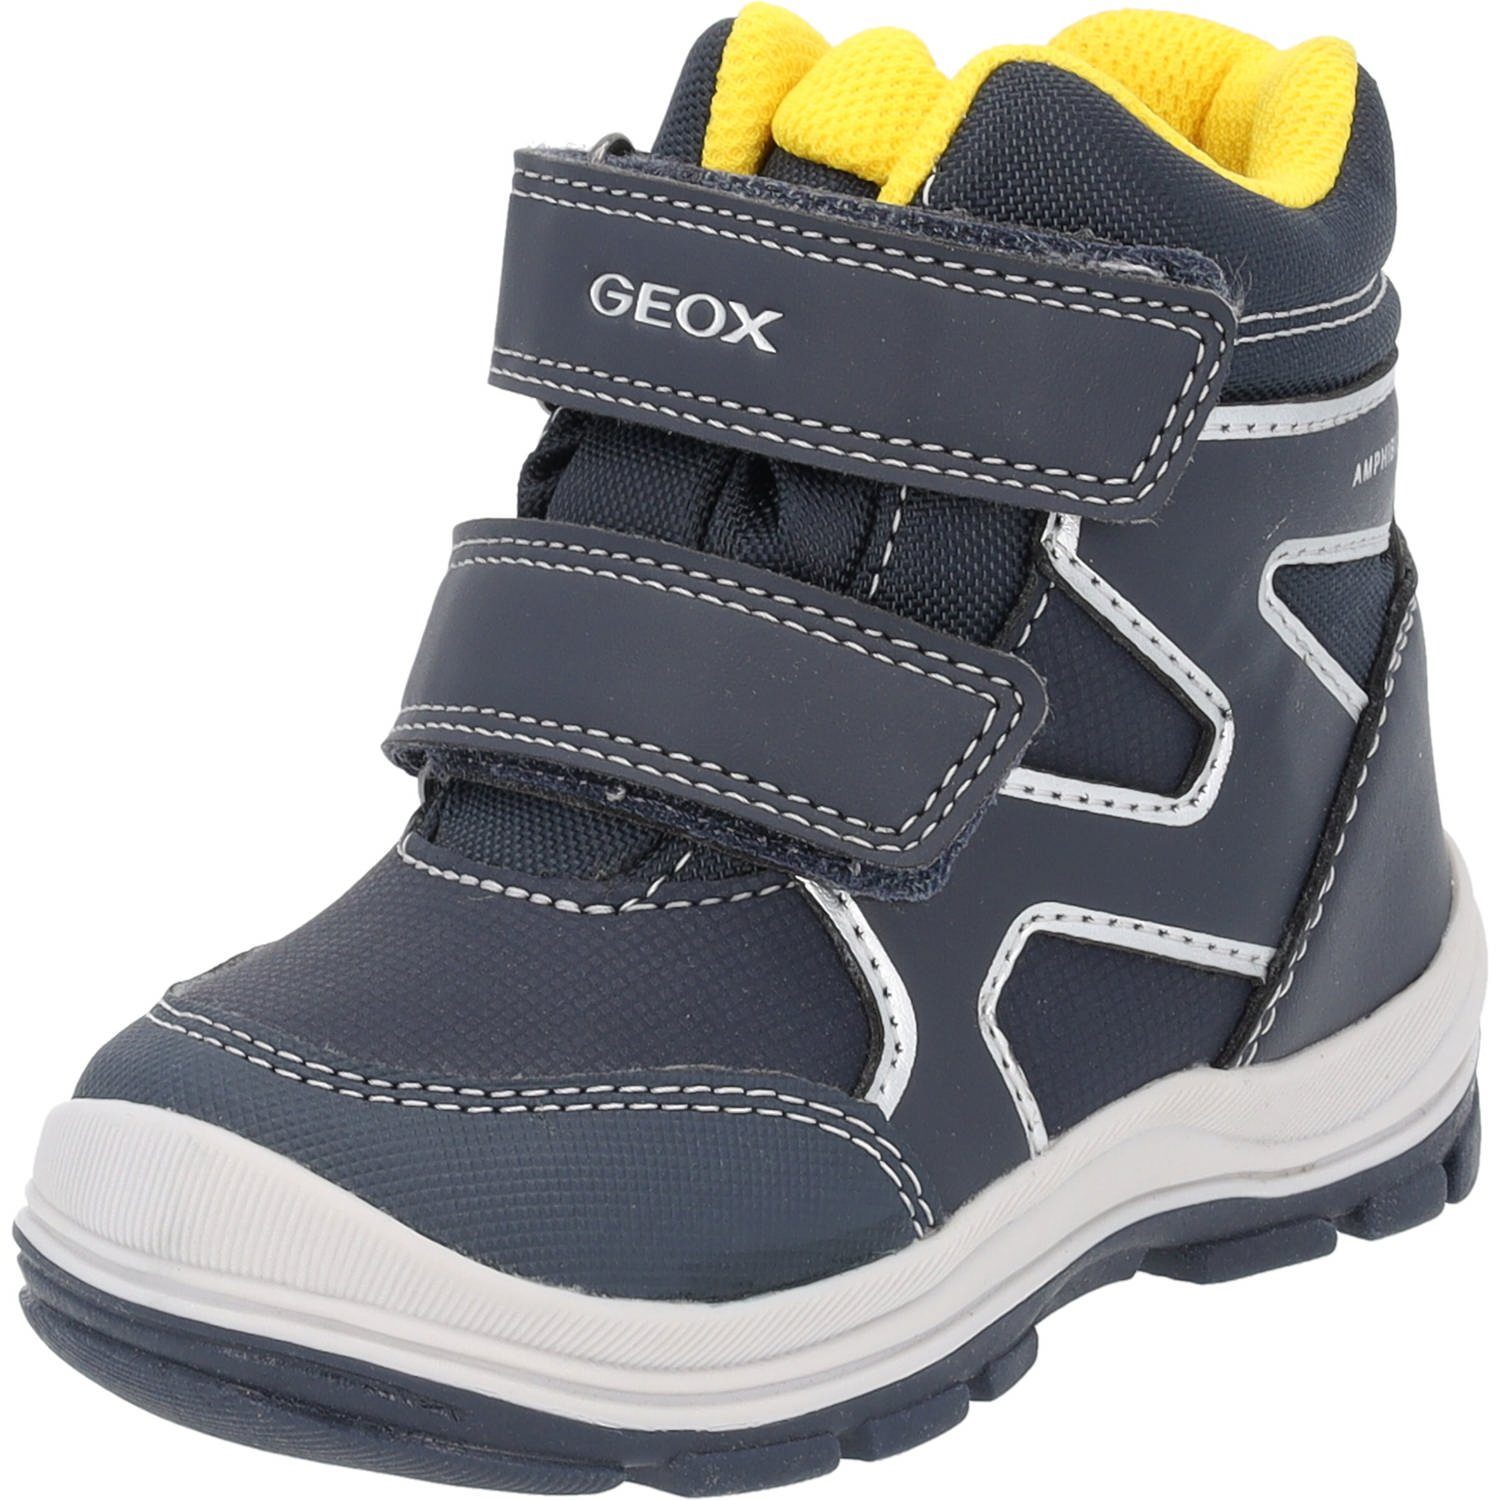 Geox Geox B263VD Stiefel navy/yellow (07101986)